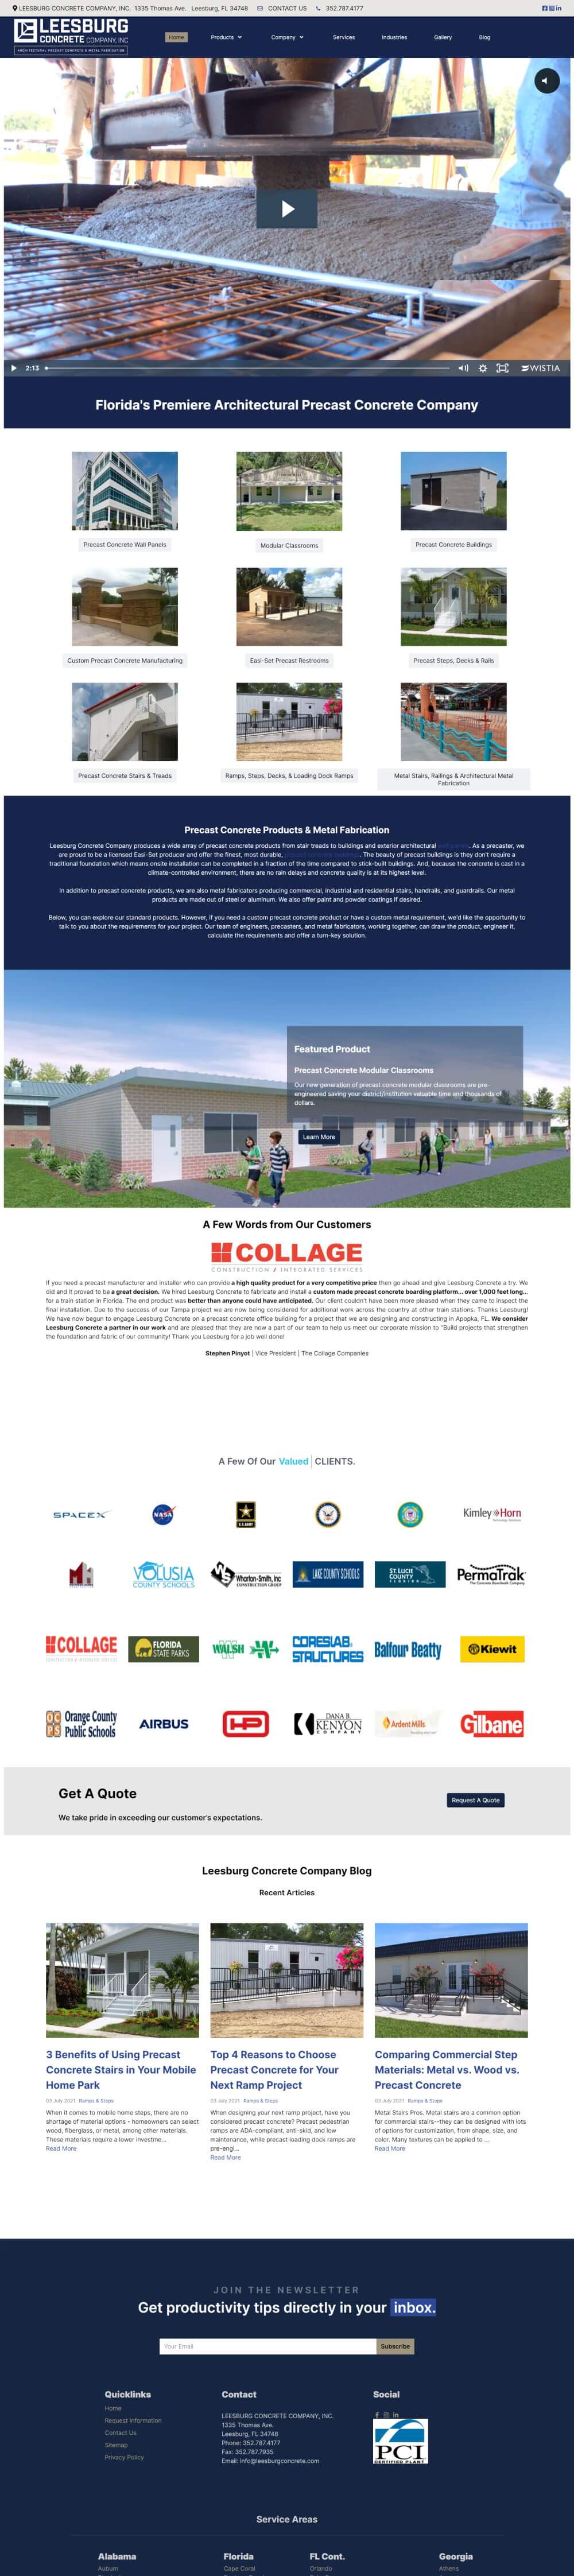 Precast Concrete Company Website Homepage